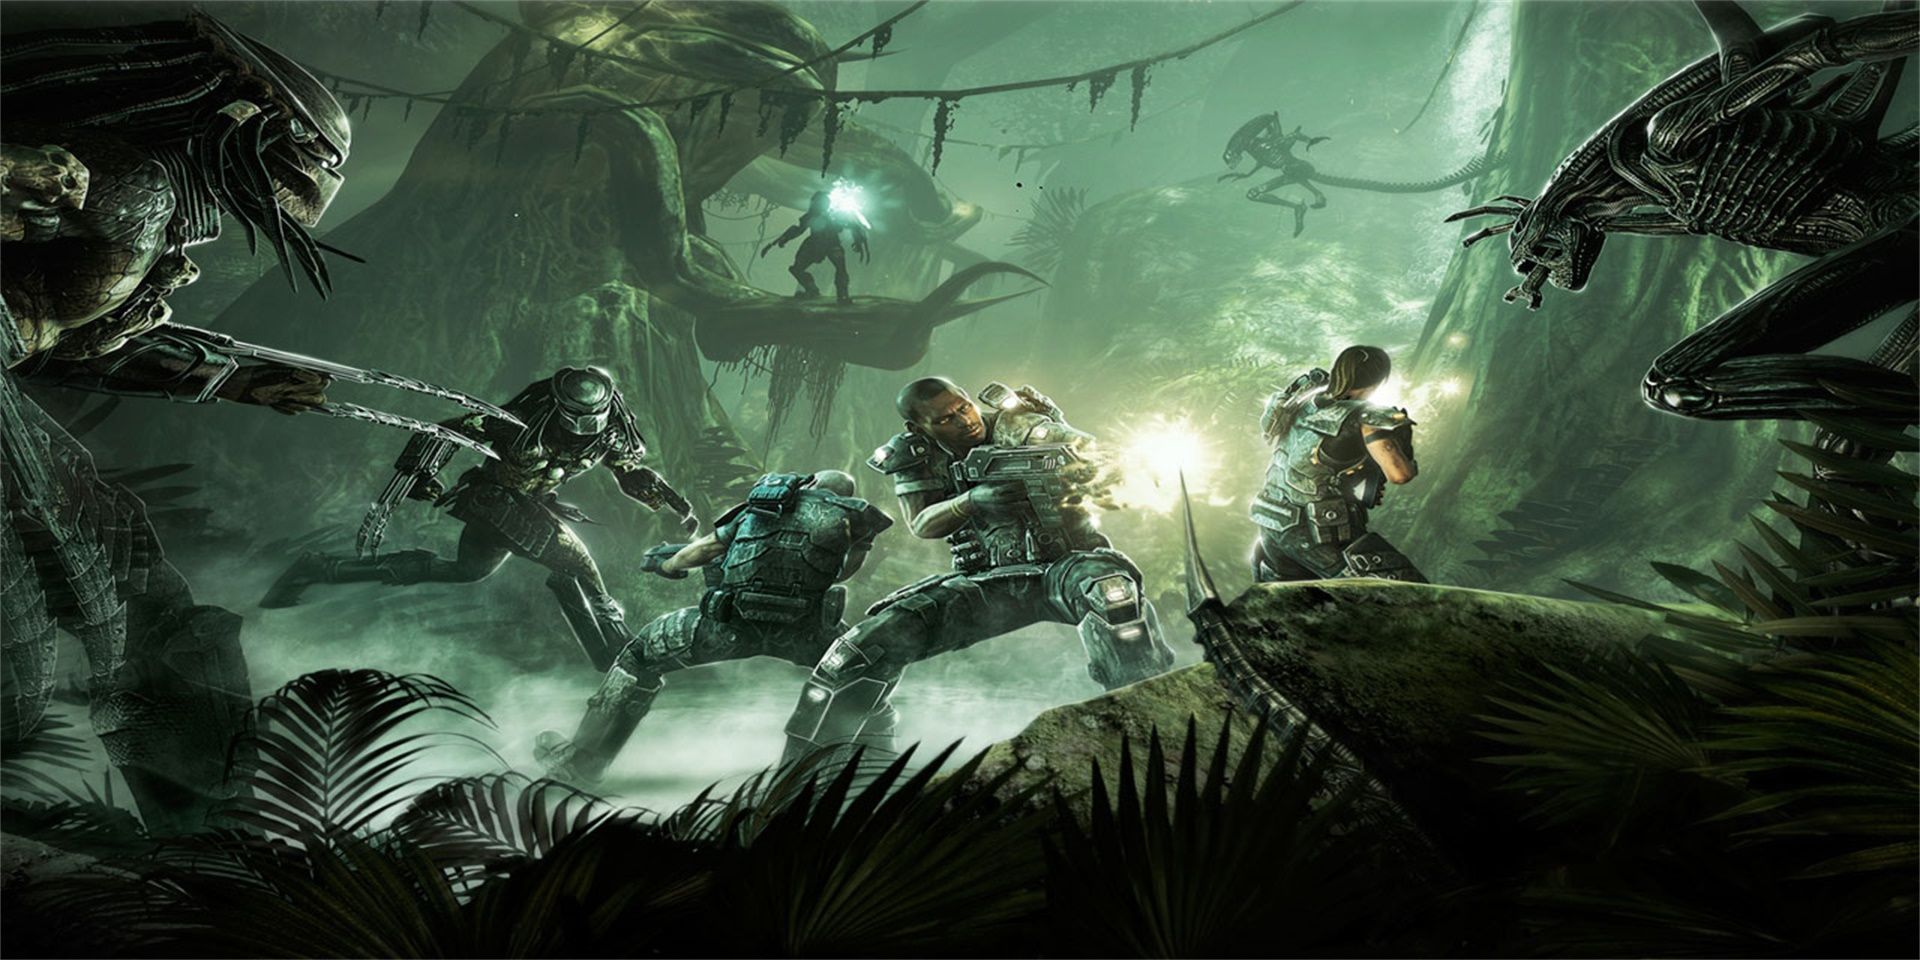 Game artwork for Aliens vs Predator showcasing marines fighting aliens and predators